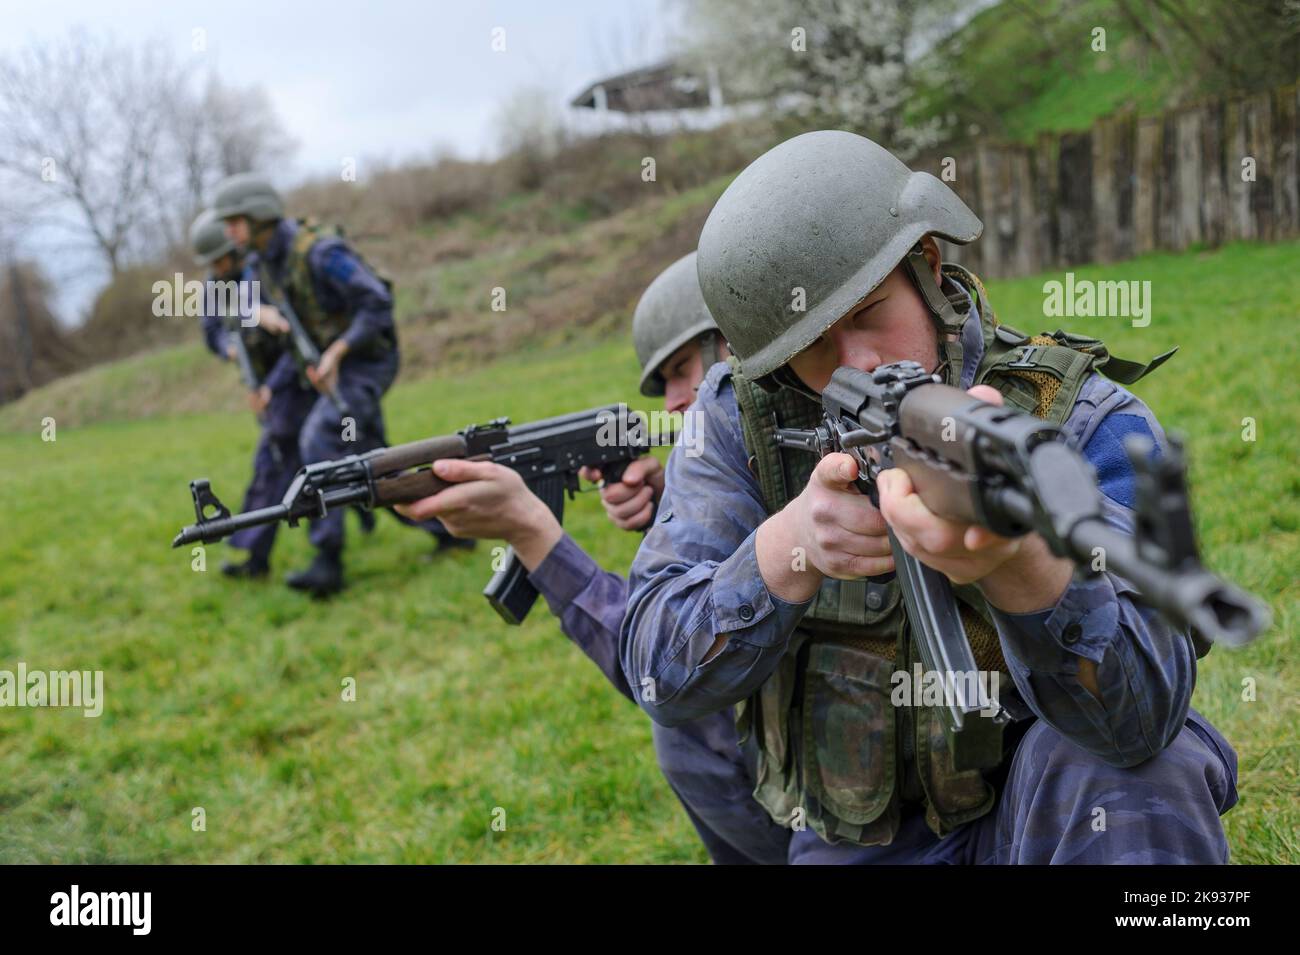 Student cadets od Serbian Police Academy (Kriminalisticko policijski univerzitet - KPU) train in basic combat tactics using assault rifles Stock Photo